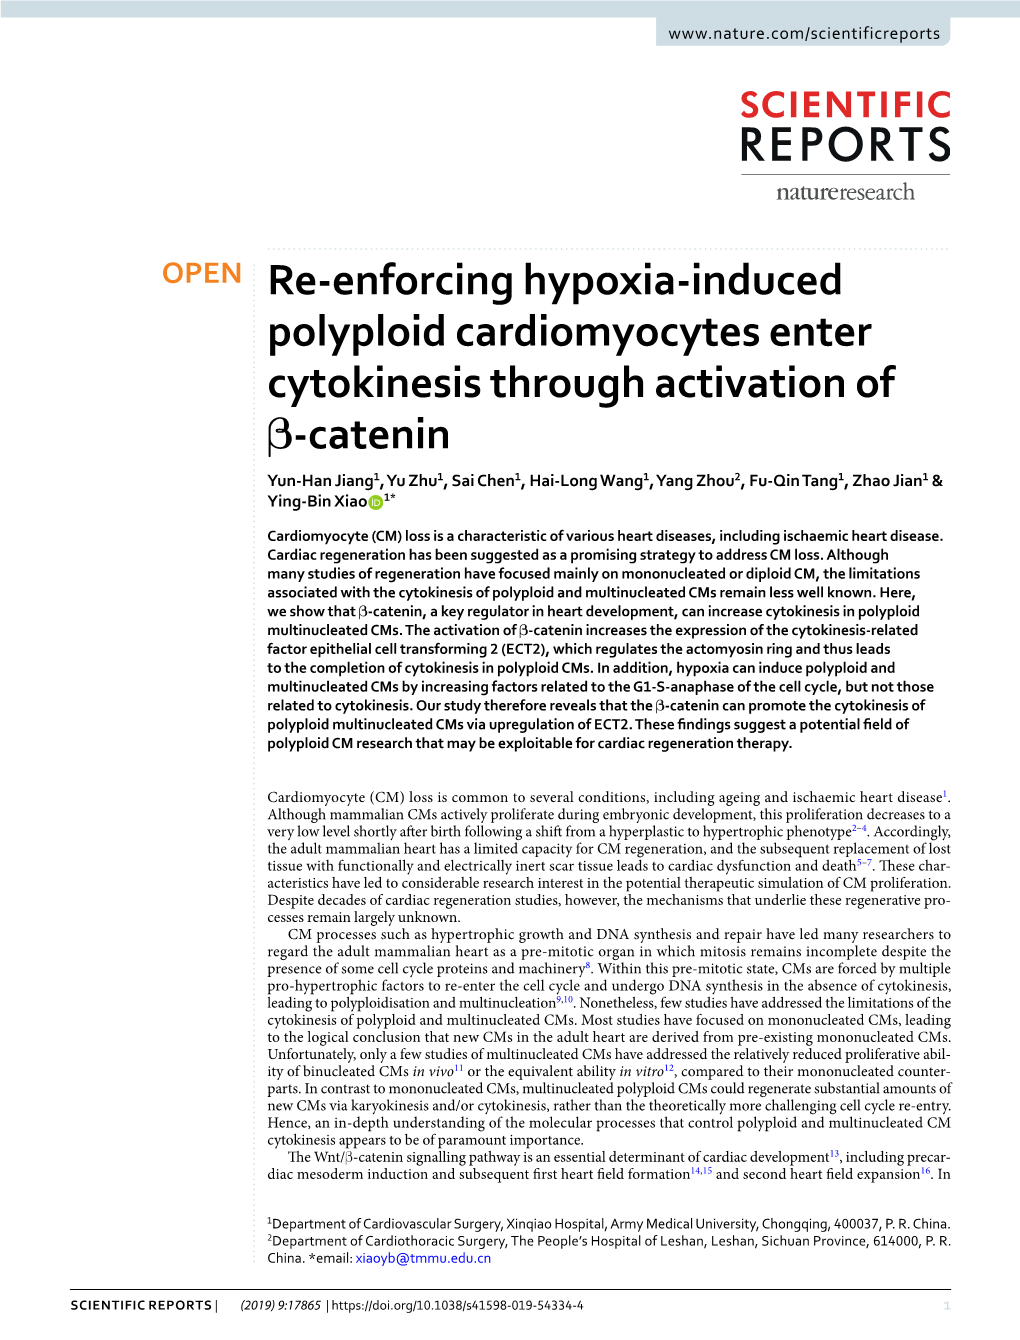 Re-Enforcing Hypoxia-Induced Polyploid Cardiomyocytes Enter